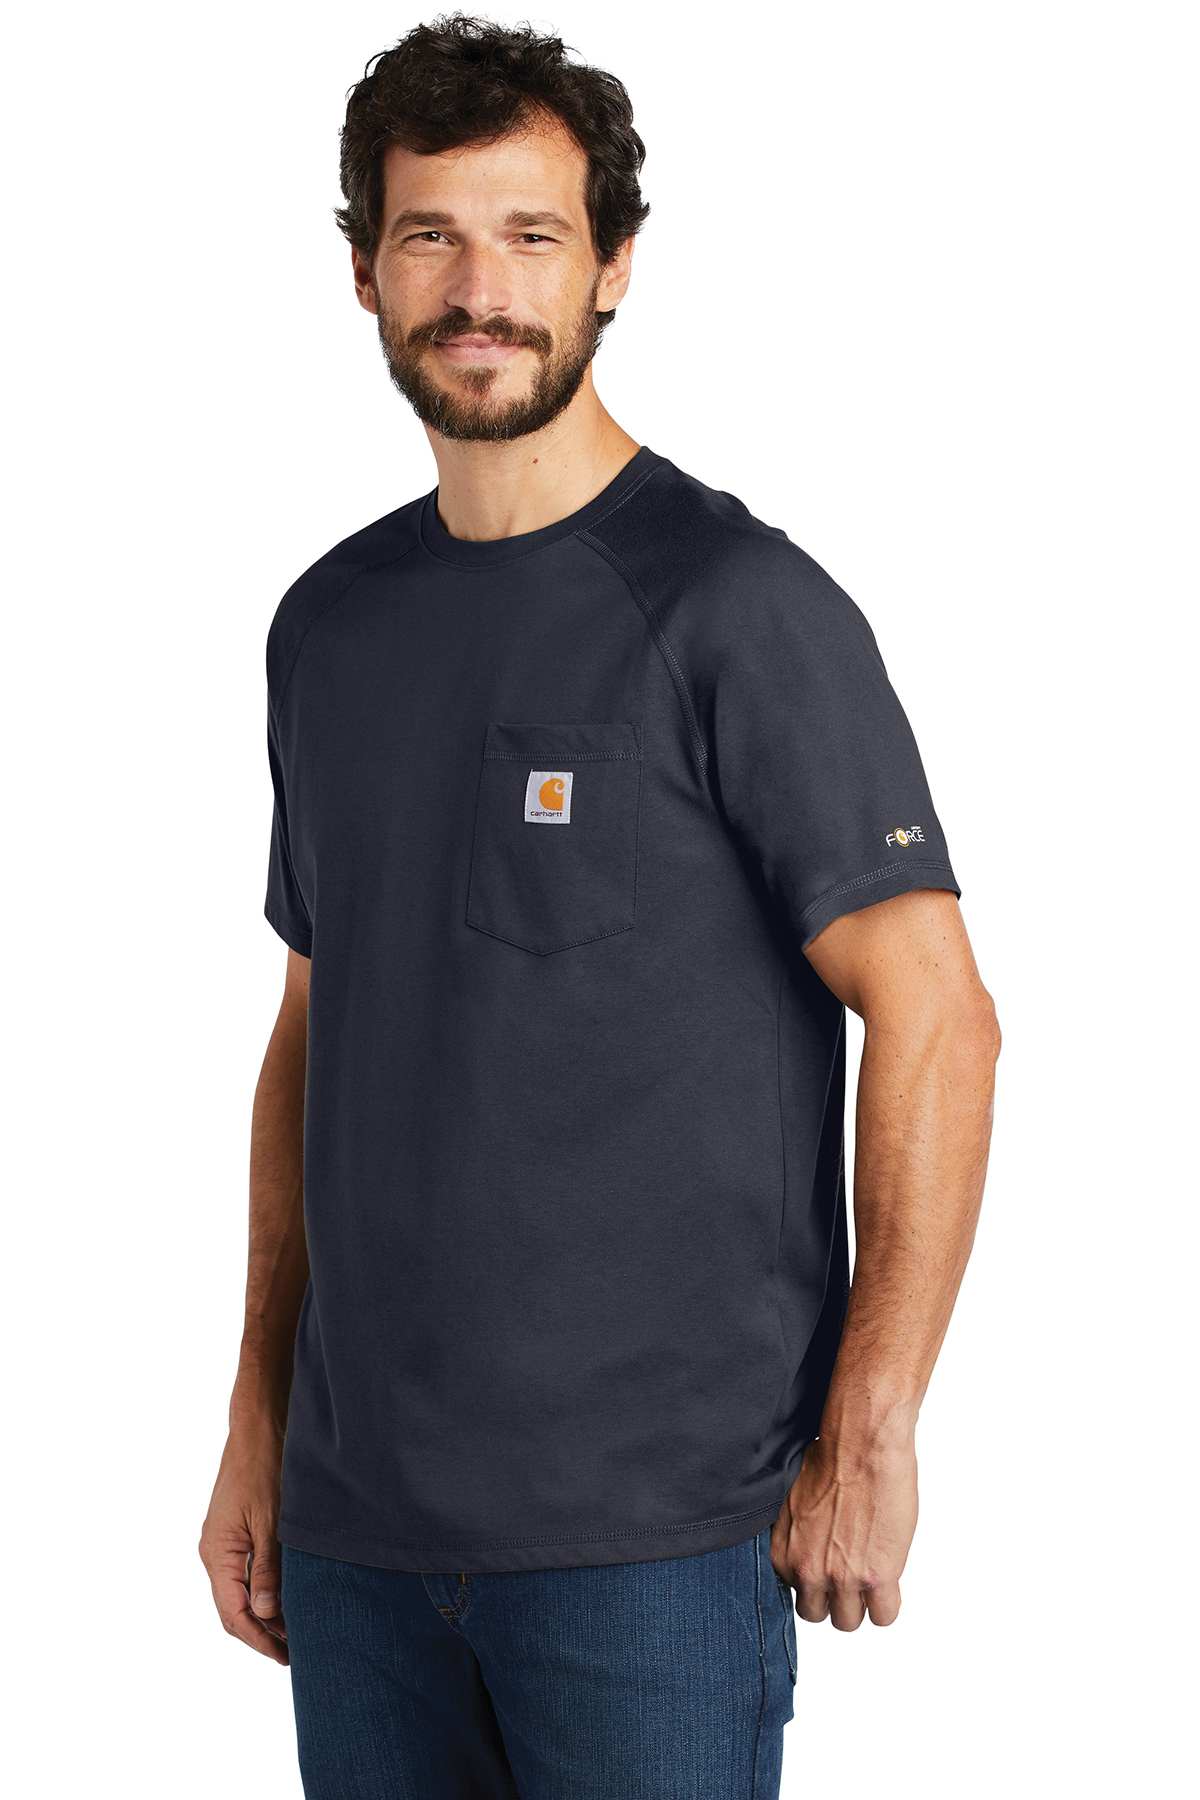 Carhartt Force Cotton Delmont Short Sleeve T-Shirt | Product | SanMar